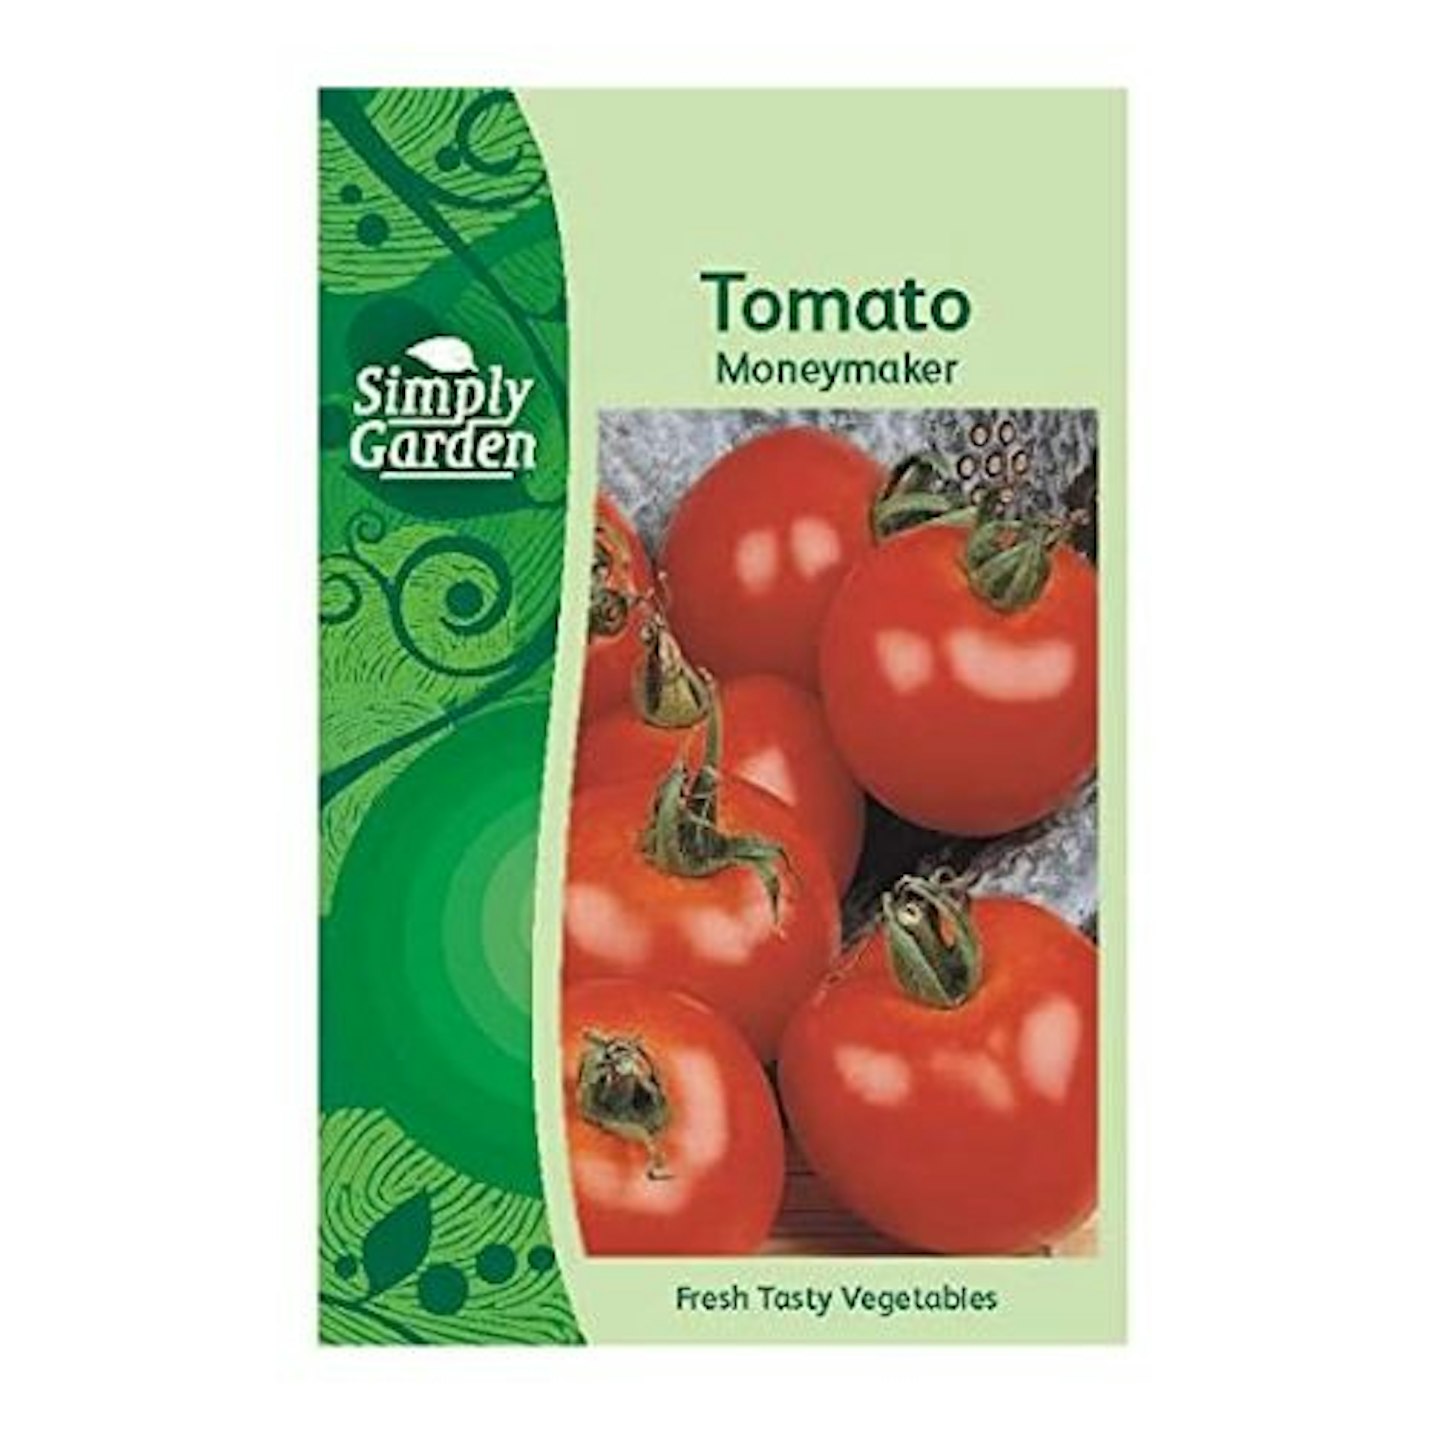 Simply Garden Tomato Moneymaker Seeds